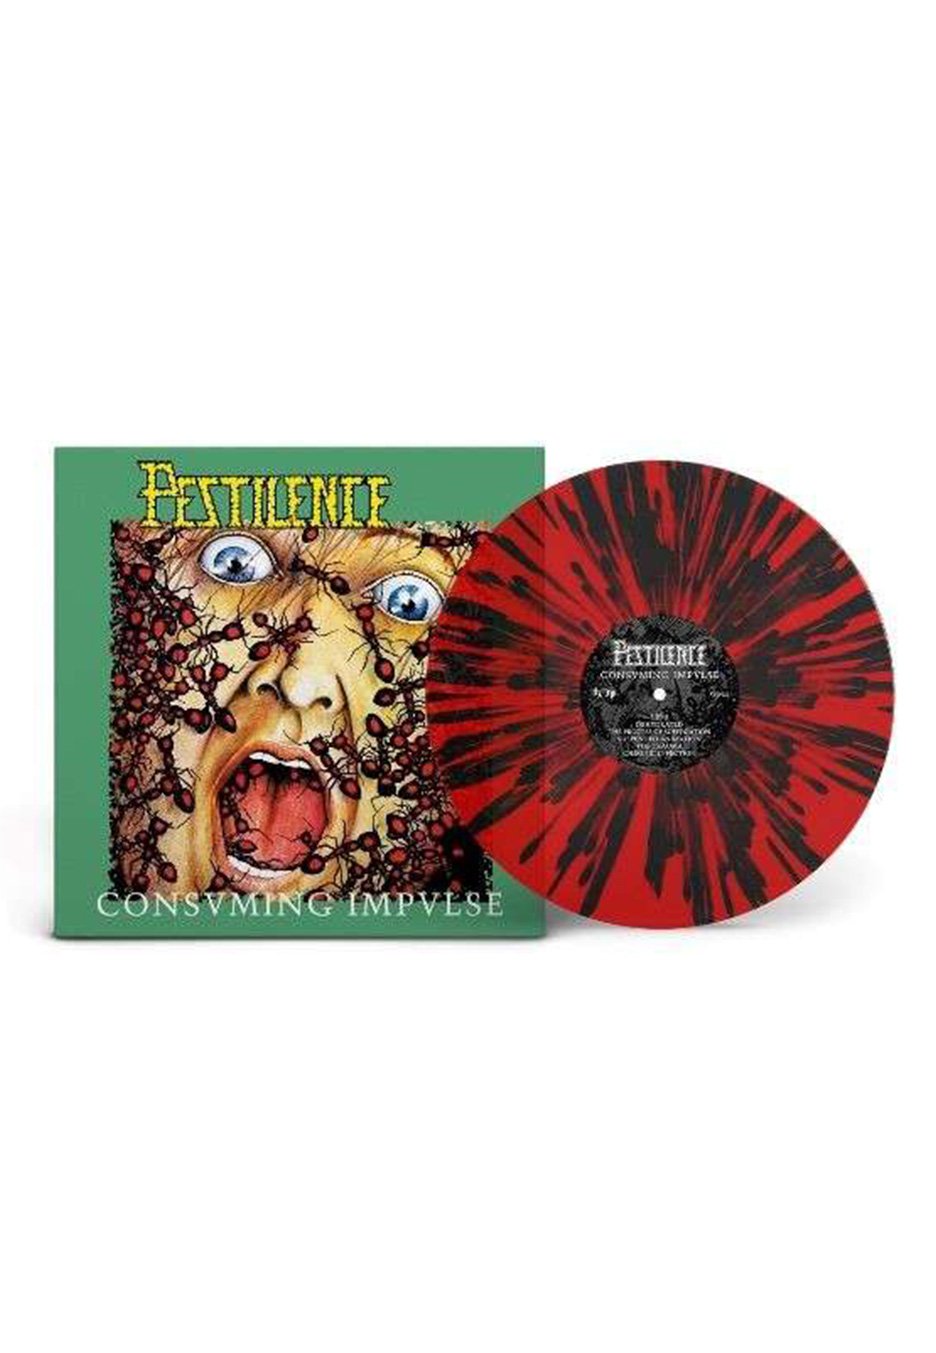 Pestilence - Consuming Impulse (Remastered) Ltd. Red/Black - Marbled Vinyl